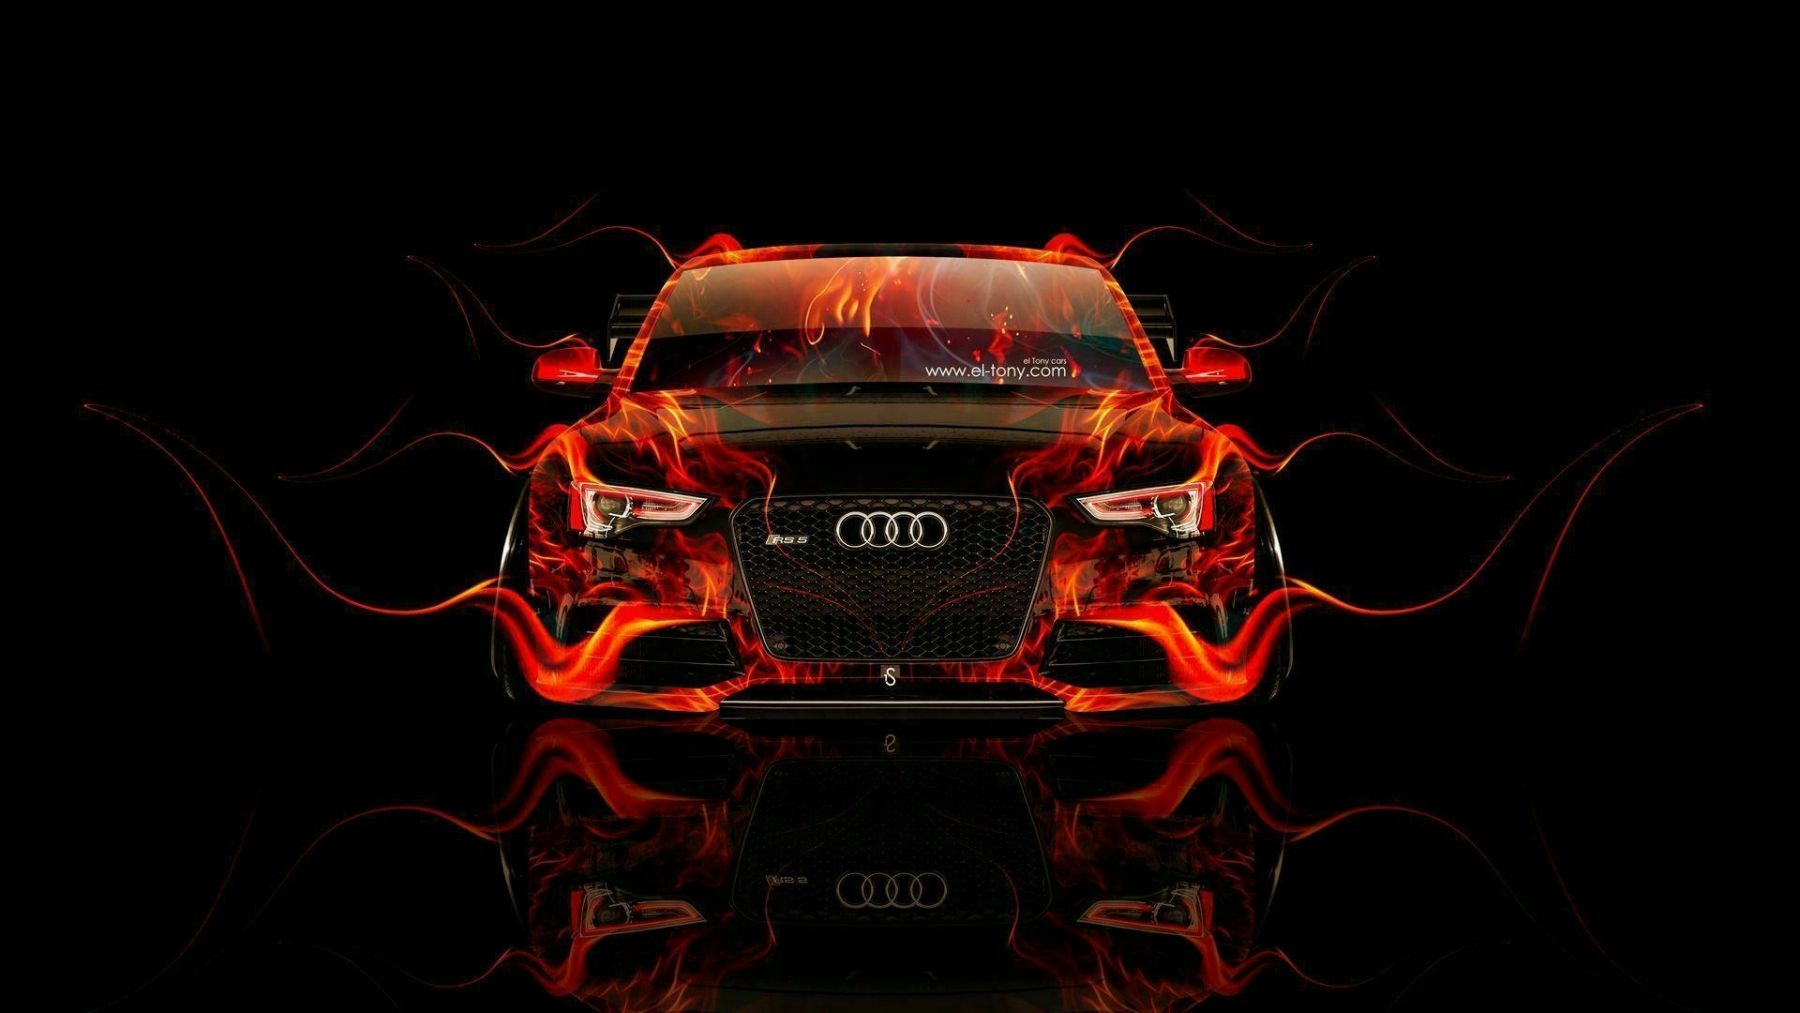 Audi Hintergrundbild 1800x1013. Audi RS5 HD Hintergründe. Hintergrundbilder. Fotos